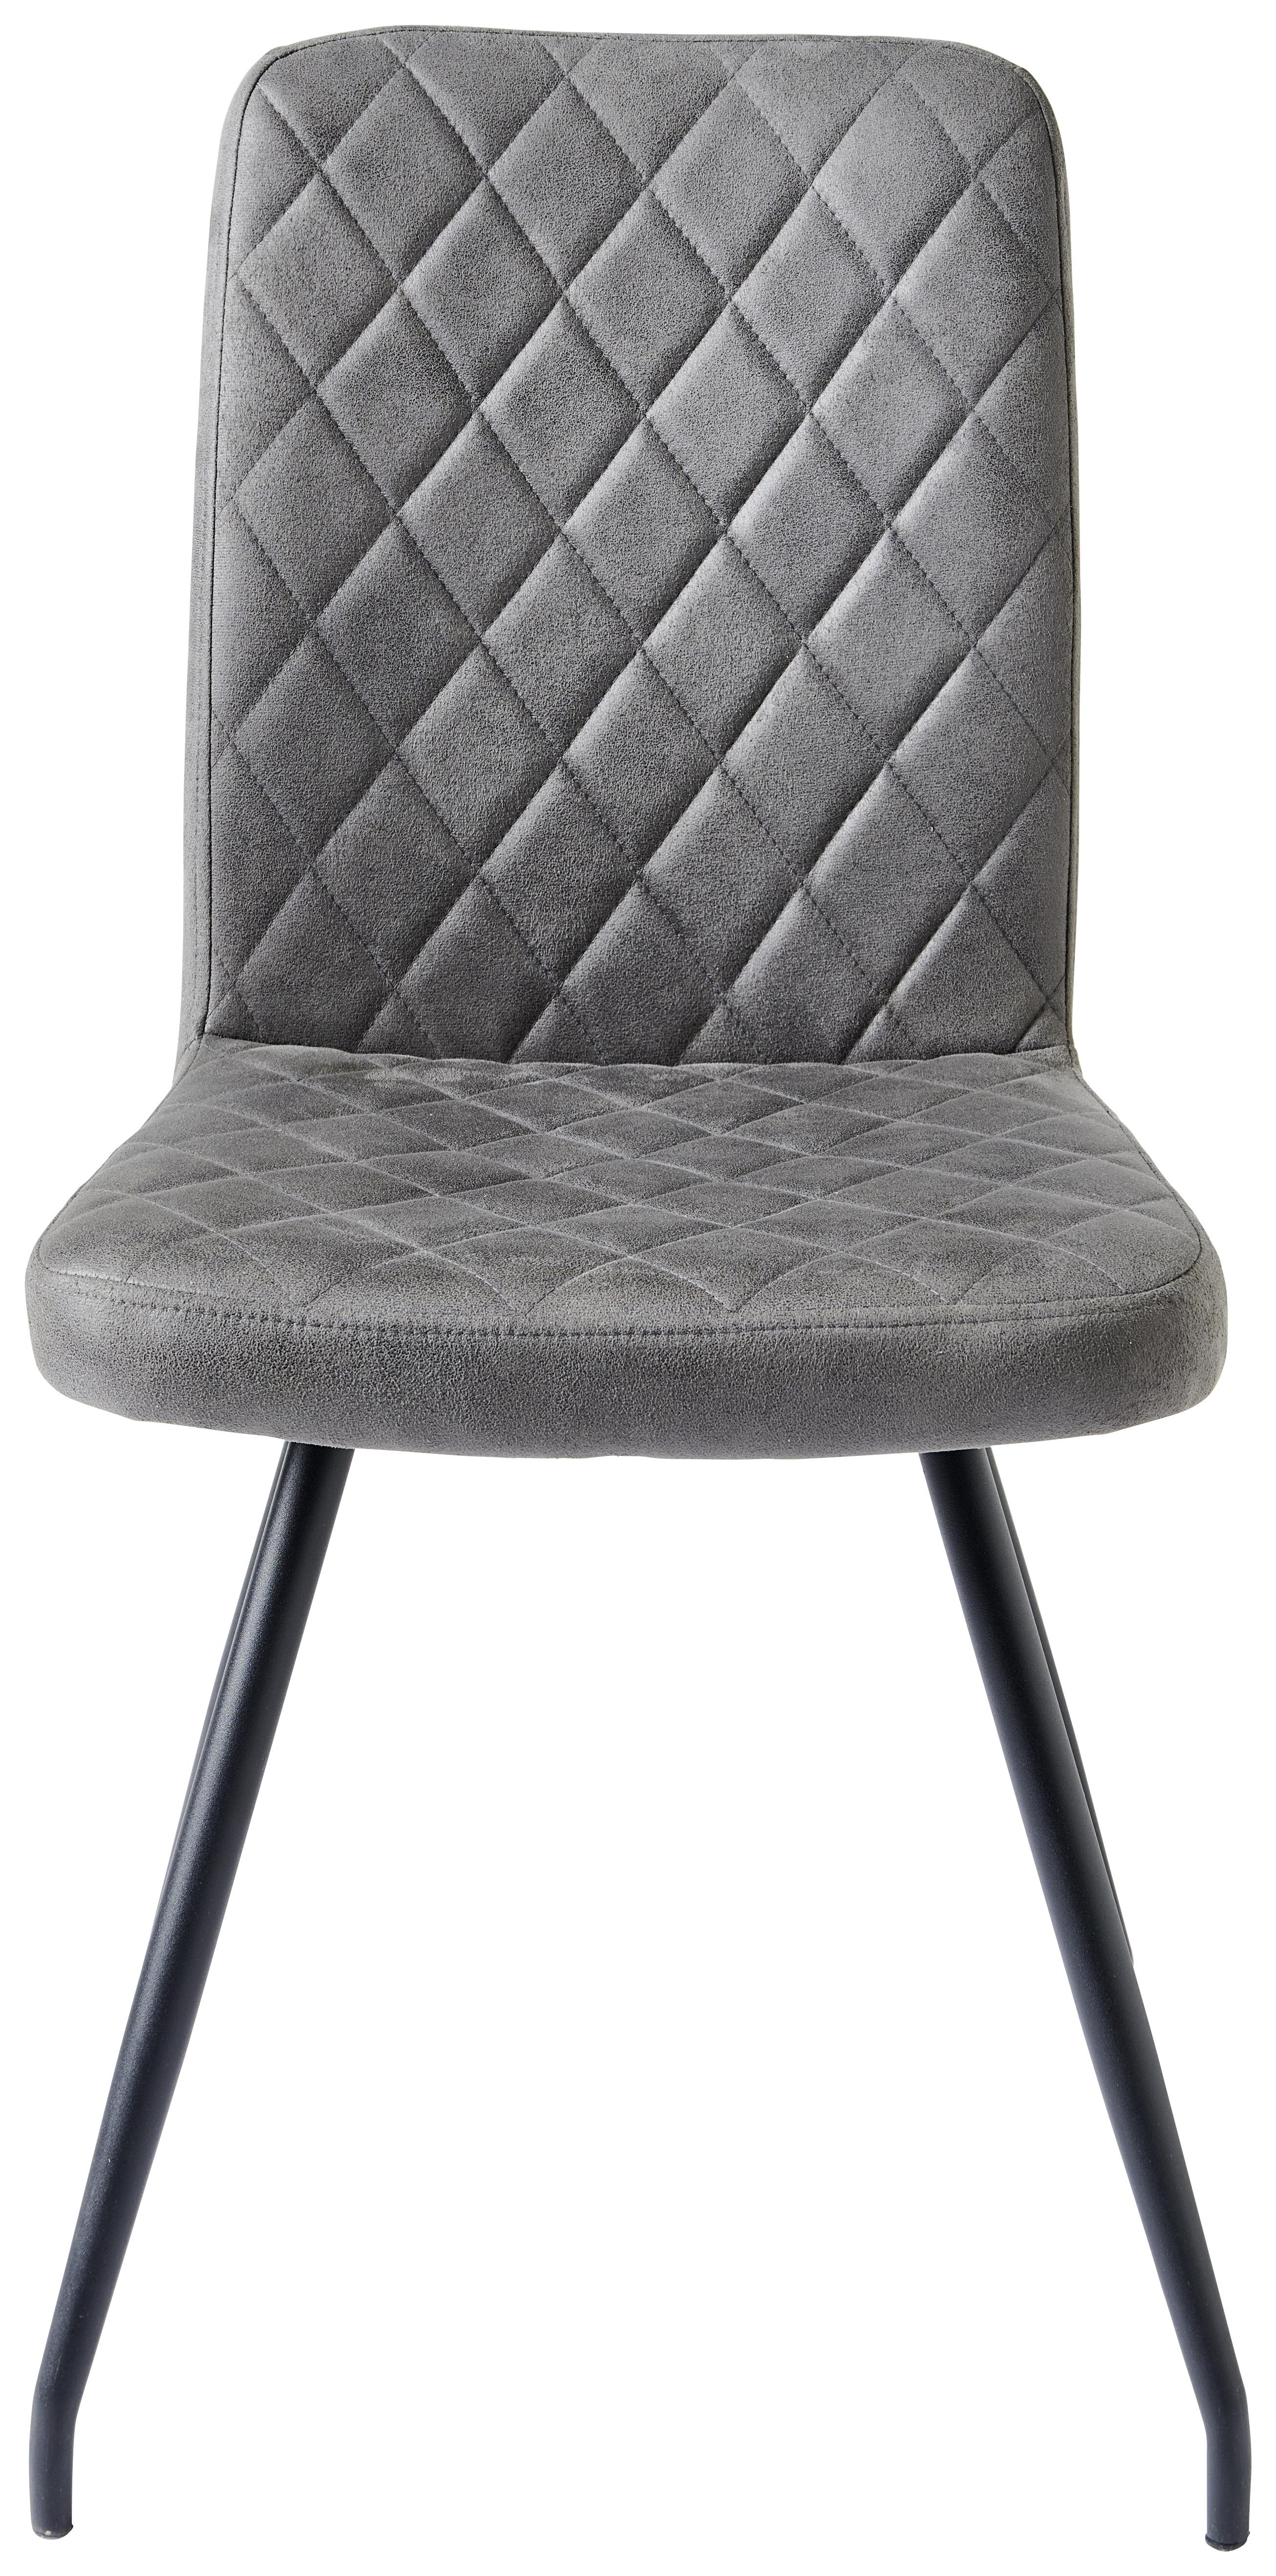 Čtyřnohá Židle Mia - šedá/černá, Konvenční, kov/textil (42/91/62cm)